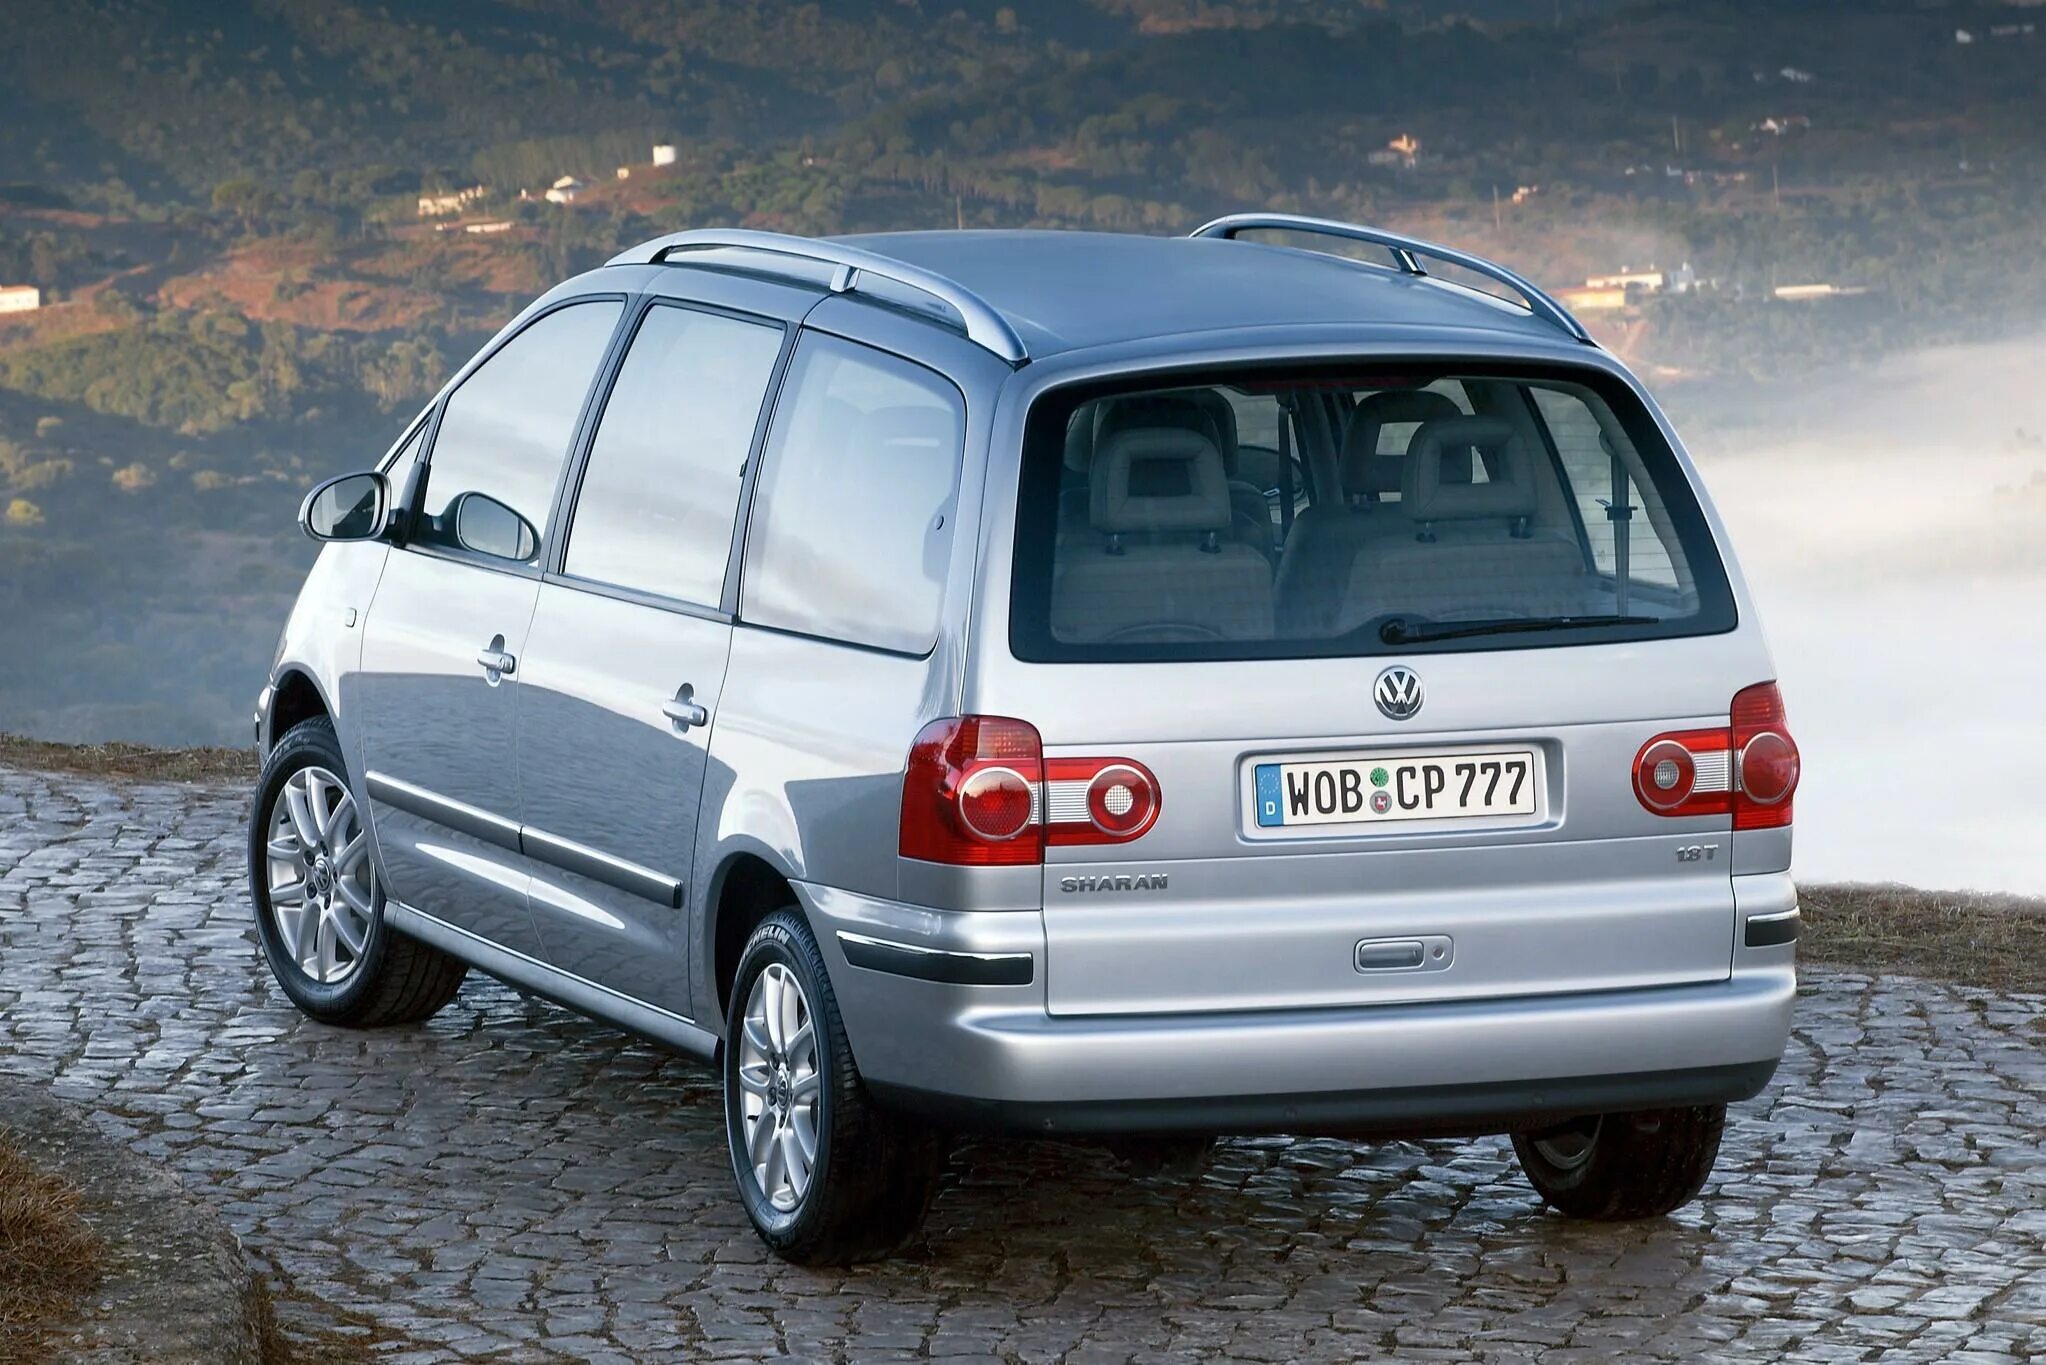 Volkswagen sharan 2000. VW Sharan 1. Фольксваген Шаран 1 поколение. VW Sharan 2004. Фольксваген Шаран 2004.